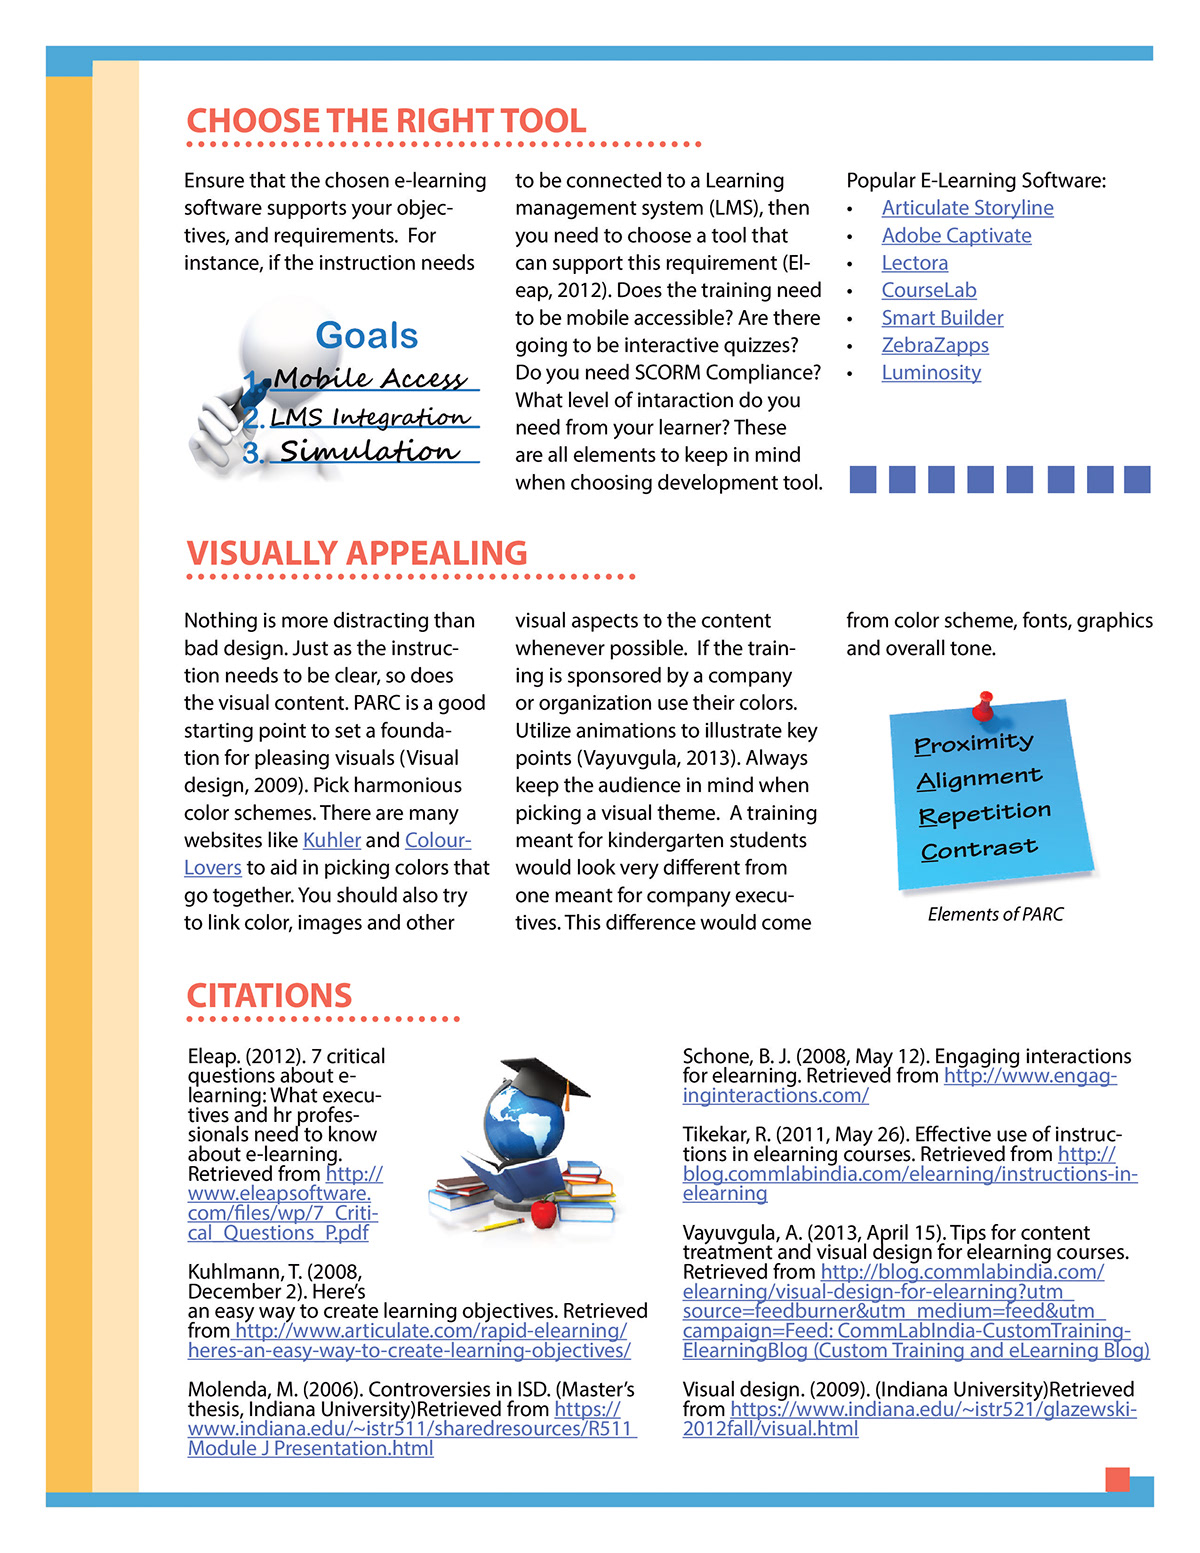 Instructional Design newsletter design principles Computer based learning e-learning